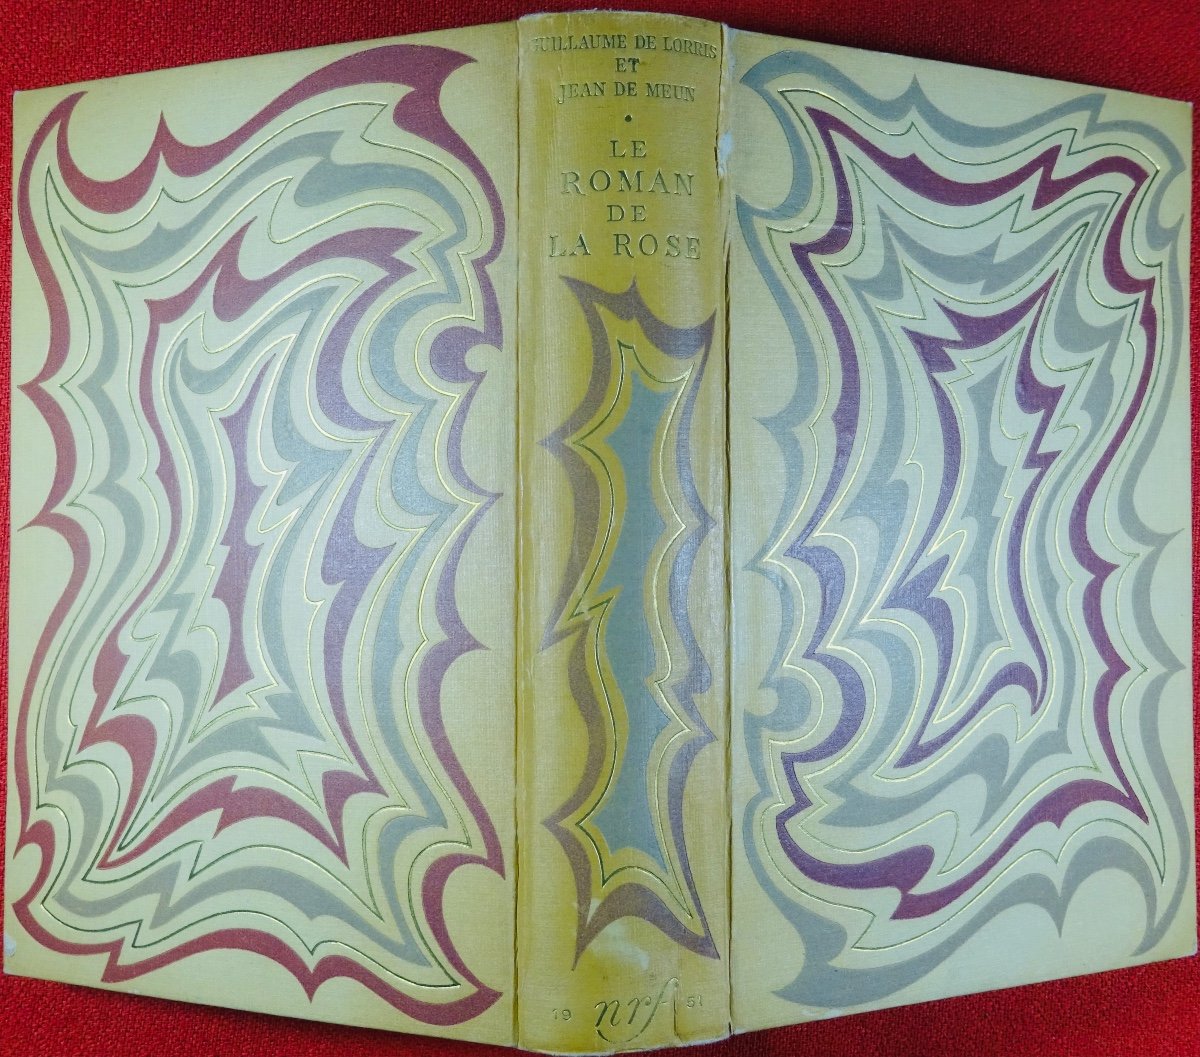 LORRIS et MELUN - Le roman de la rose. Gallimard, 1949, cartonnage de Paul BONET.